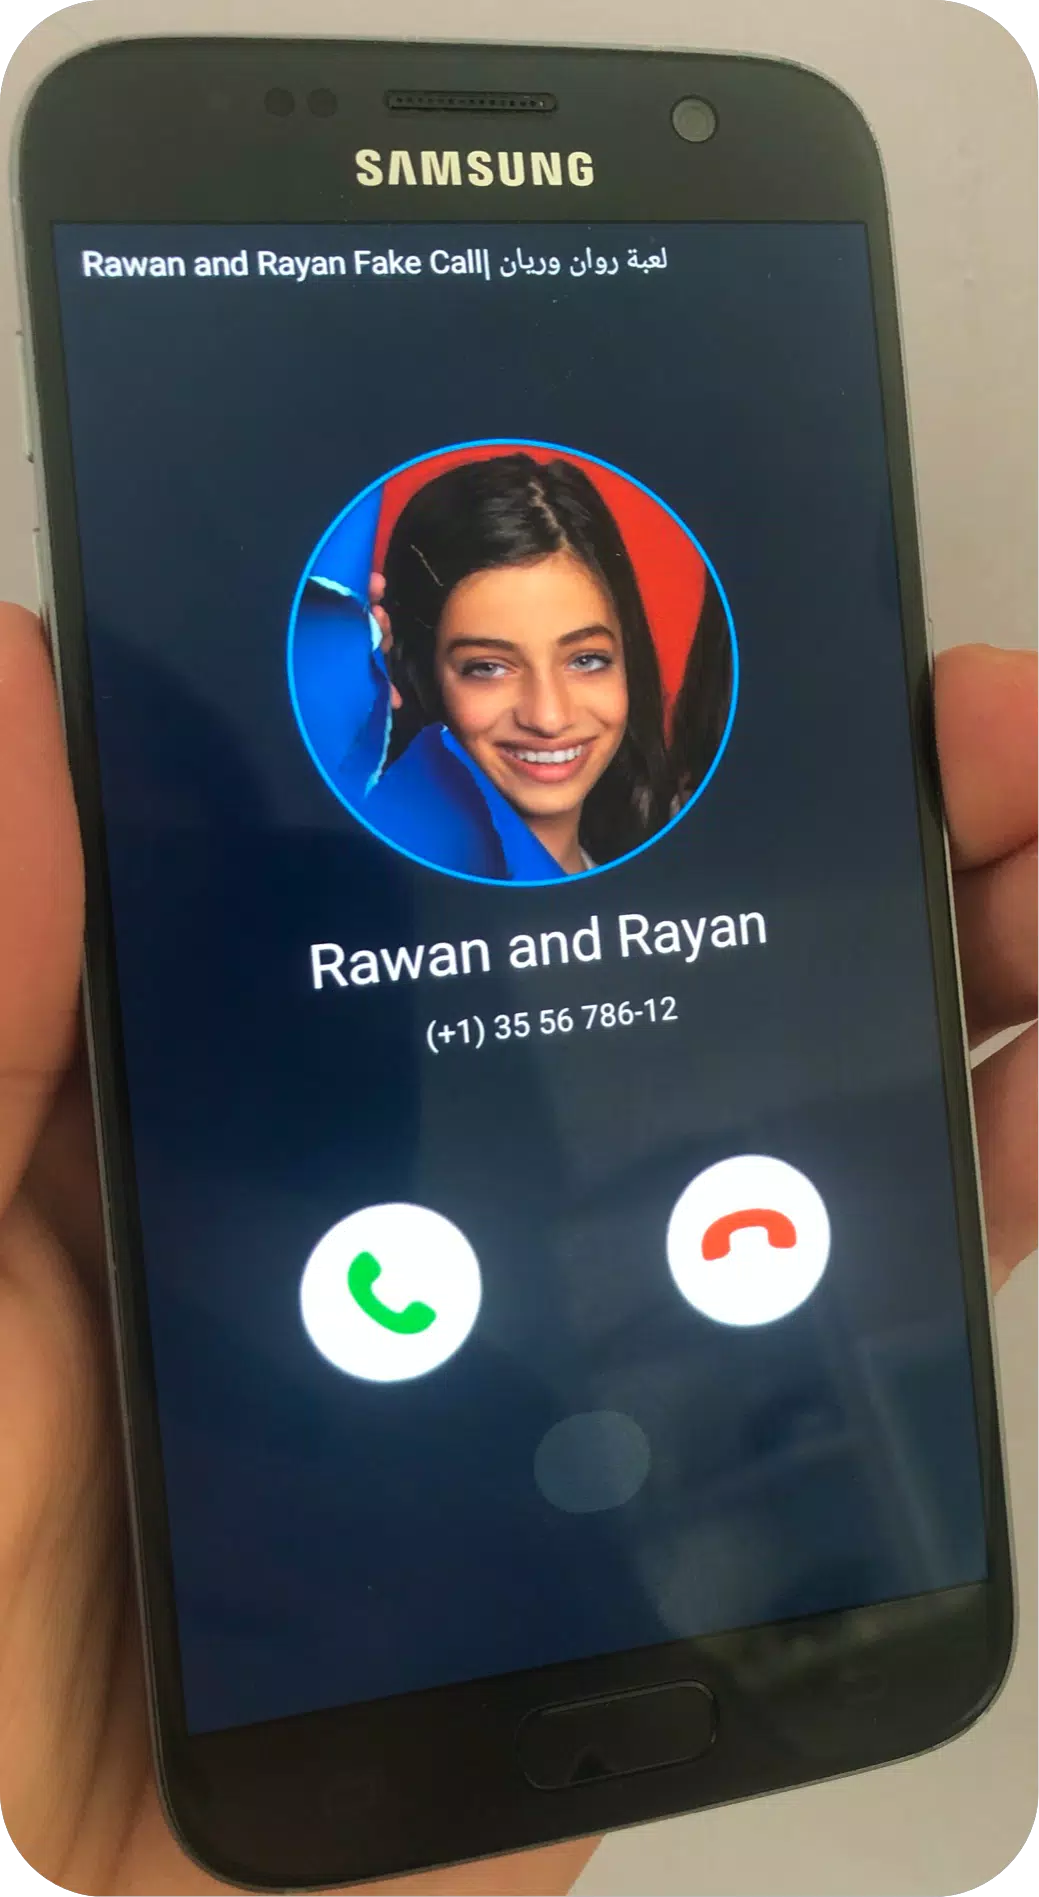 لعبة روان وريان | Rawan and Rayan Fake Call APK für Android herunterladen